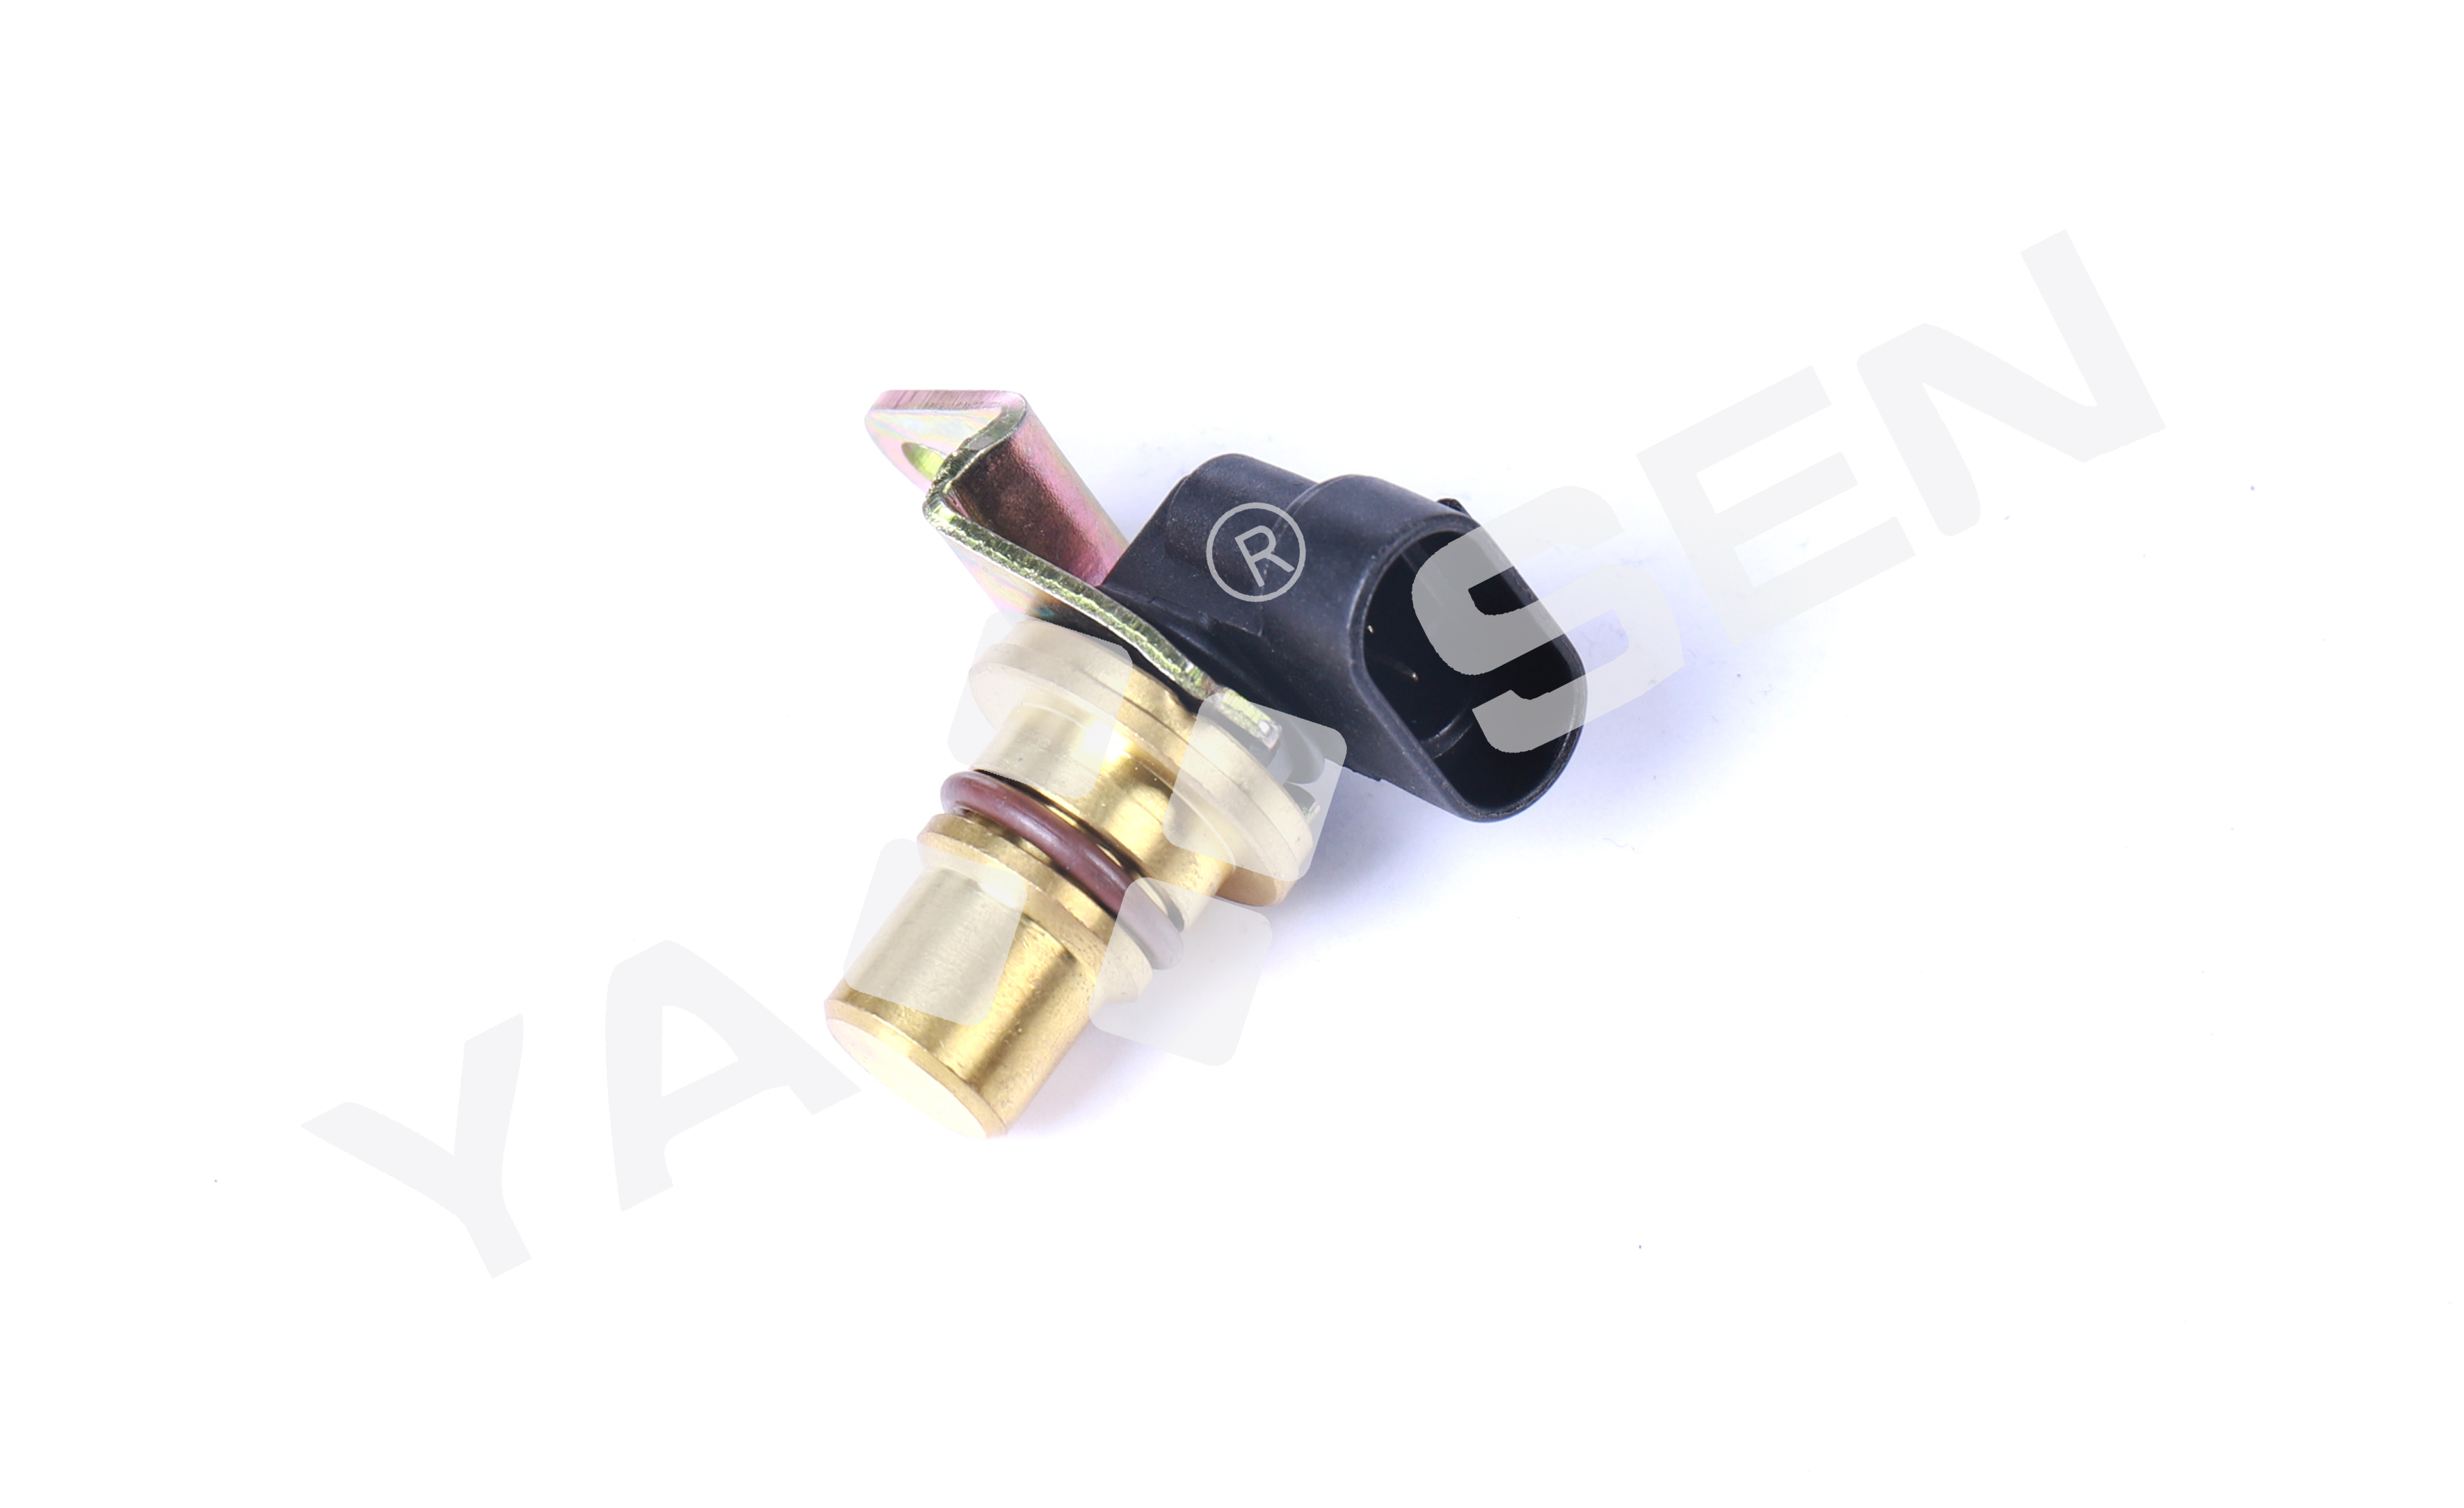 Auto Camshaft position sensor  for CHEVROLET/DODGE, 10456145  10456615  72597129 PC113  5S1236 SU1056  96031  213795